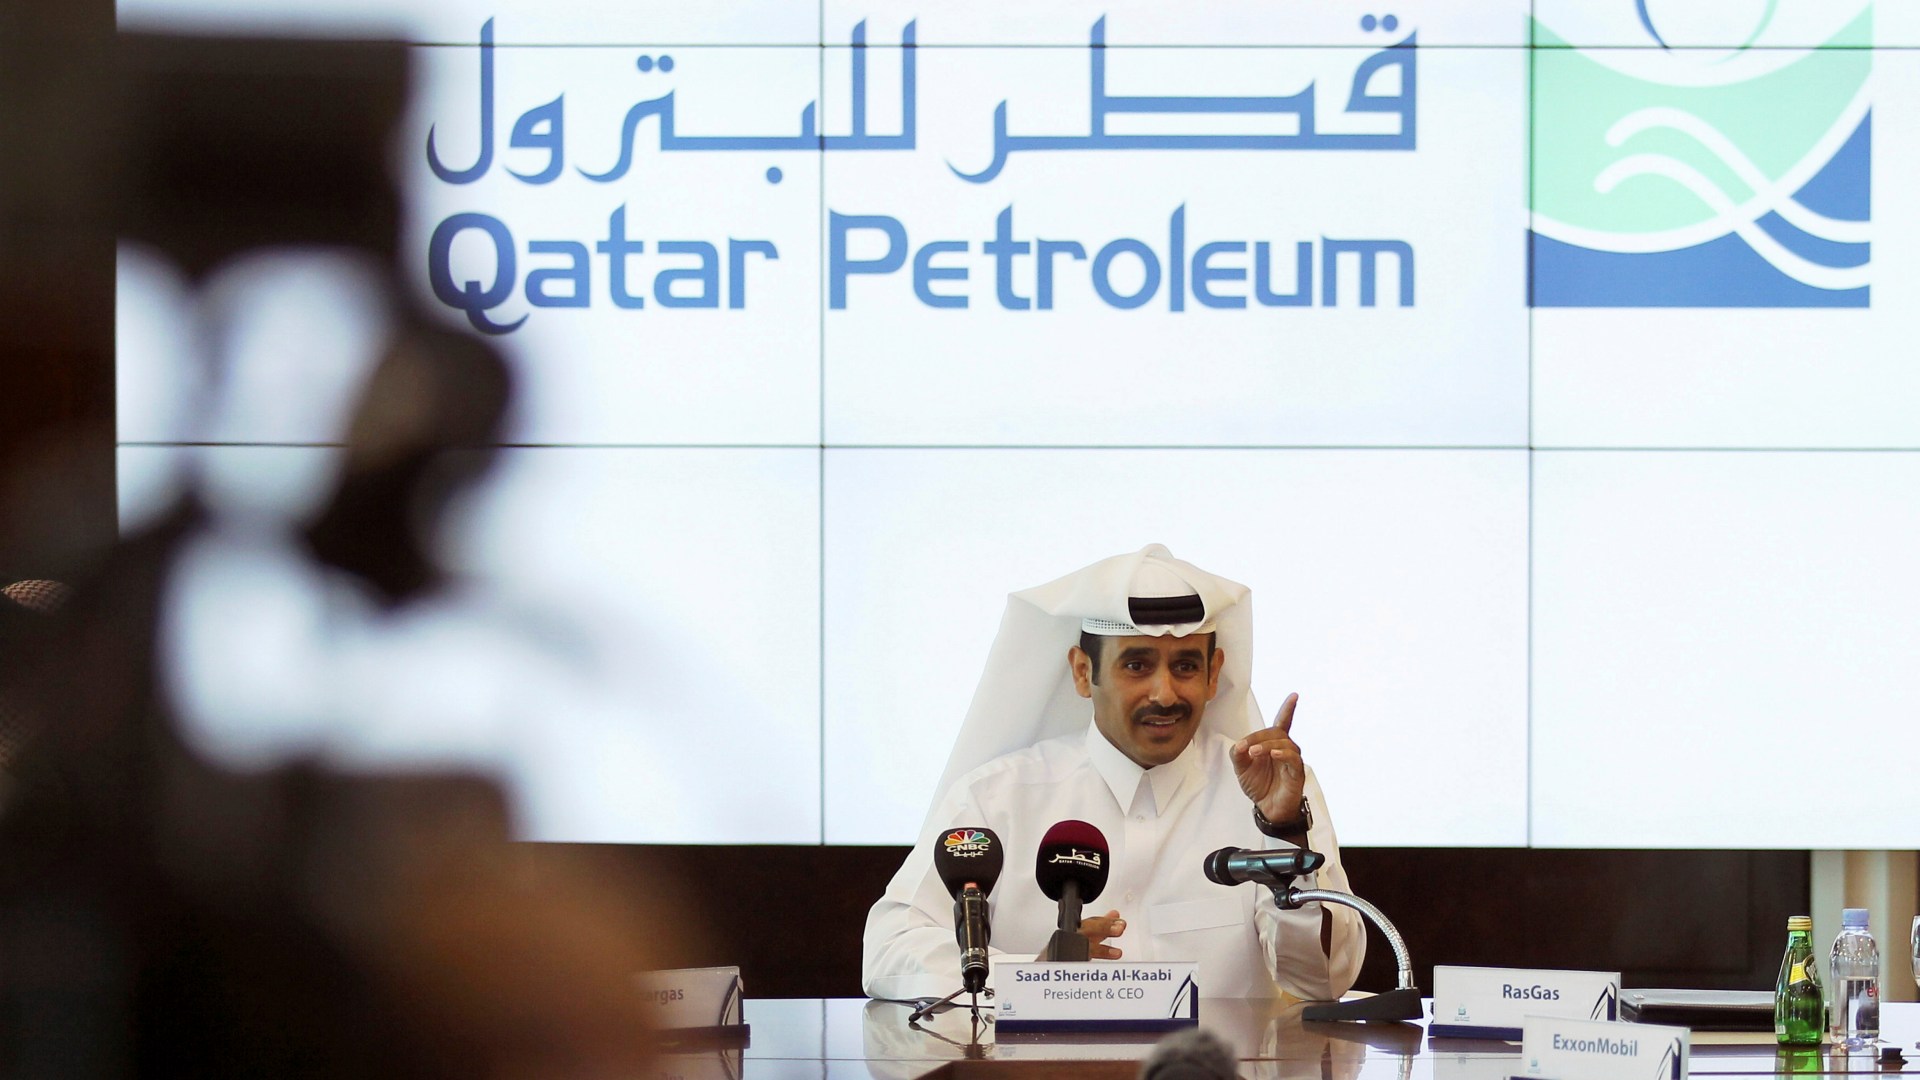 Qatar Petroleum changes name to Qatar Energy | Energy News | Al Jazeera